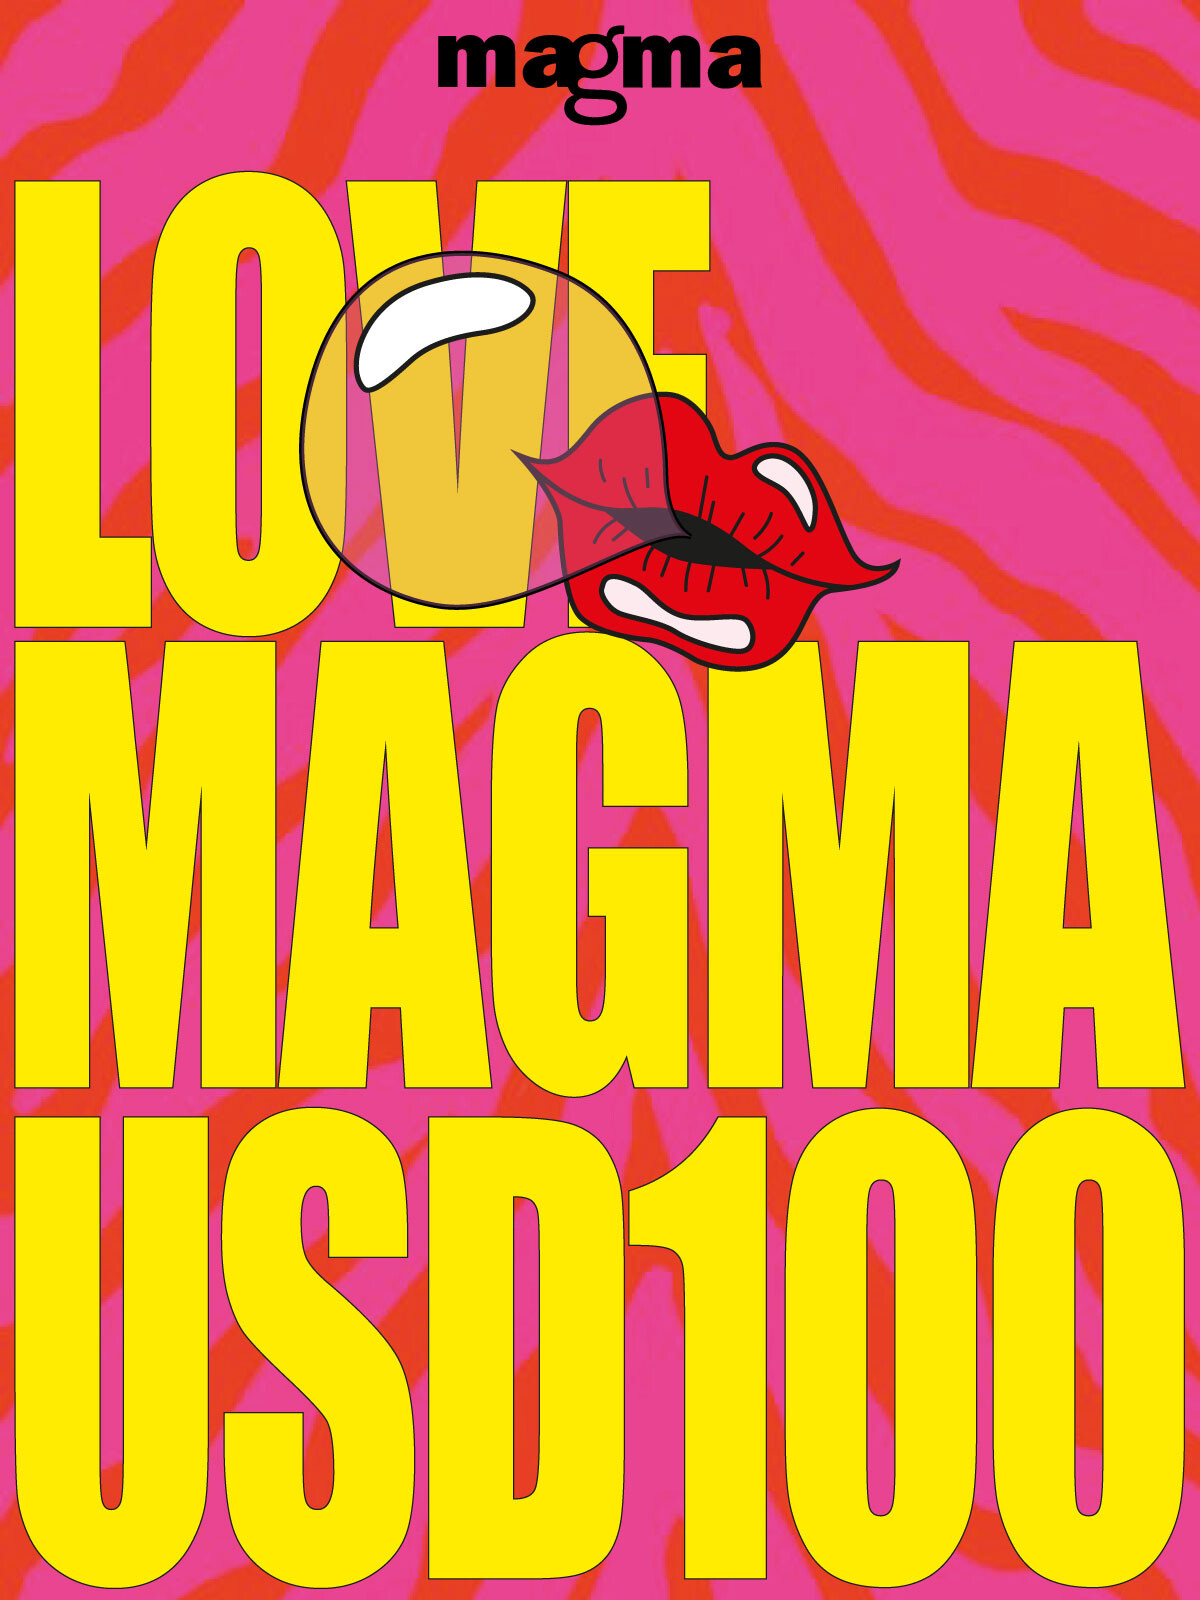 Magma gift card S/C